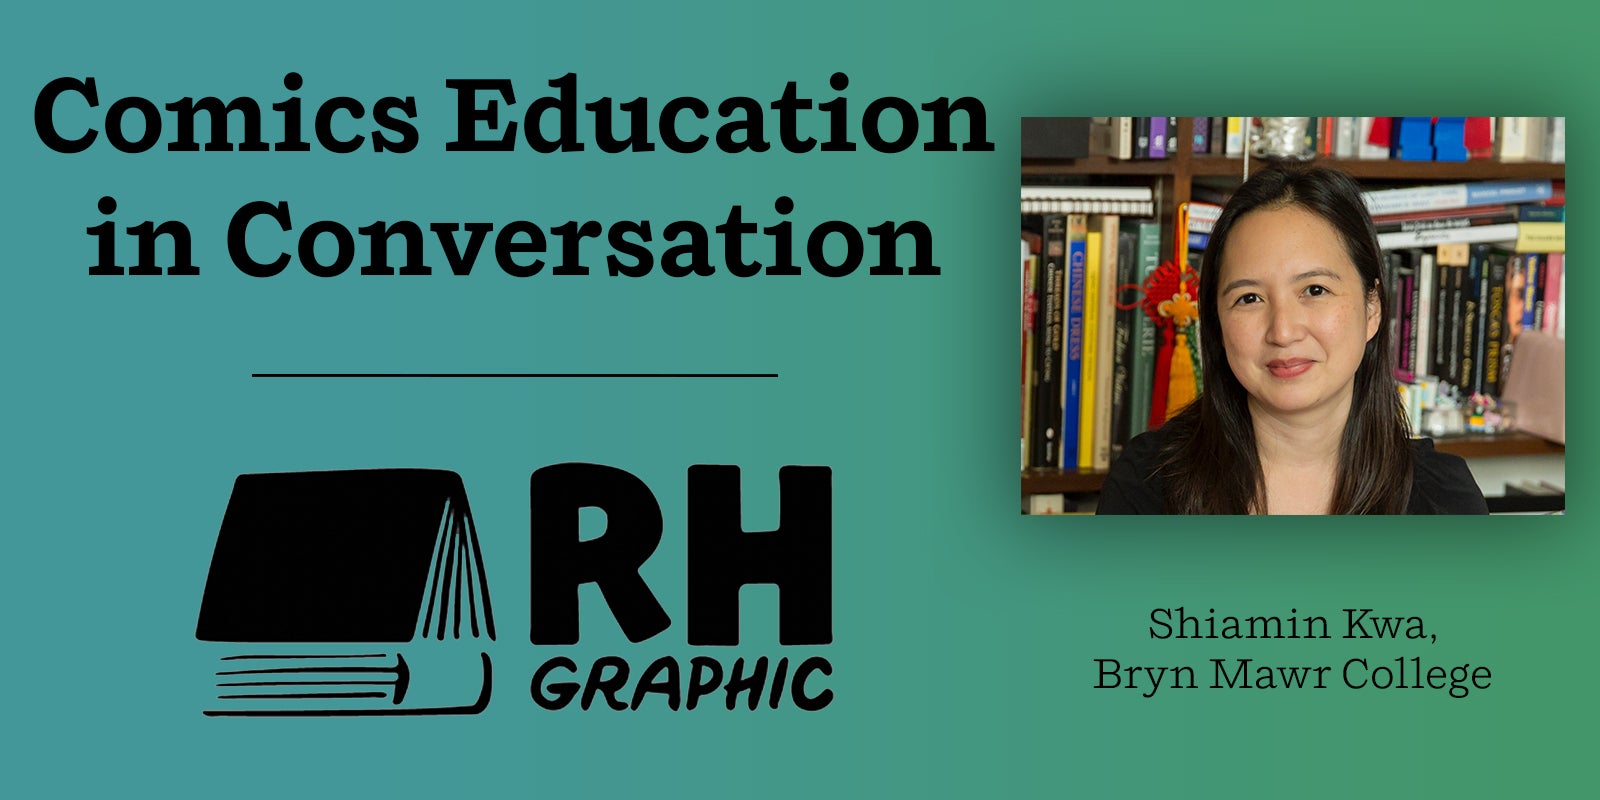 Comics Education in Conversation: Shiamin Kwa